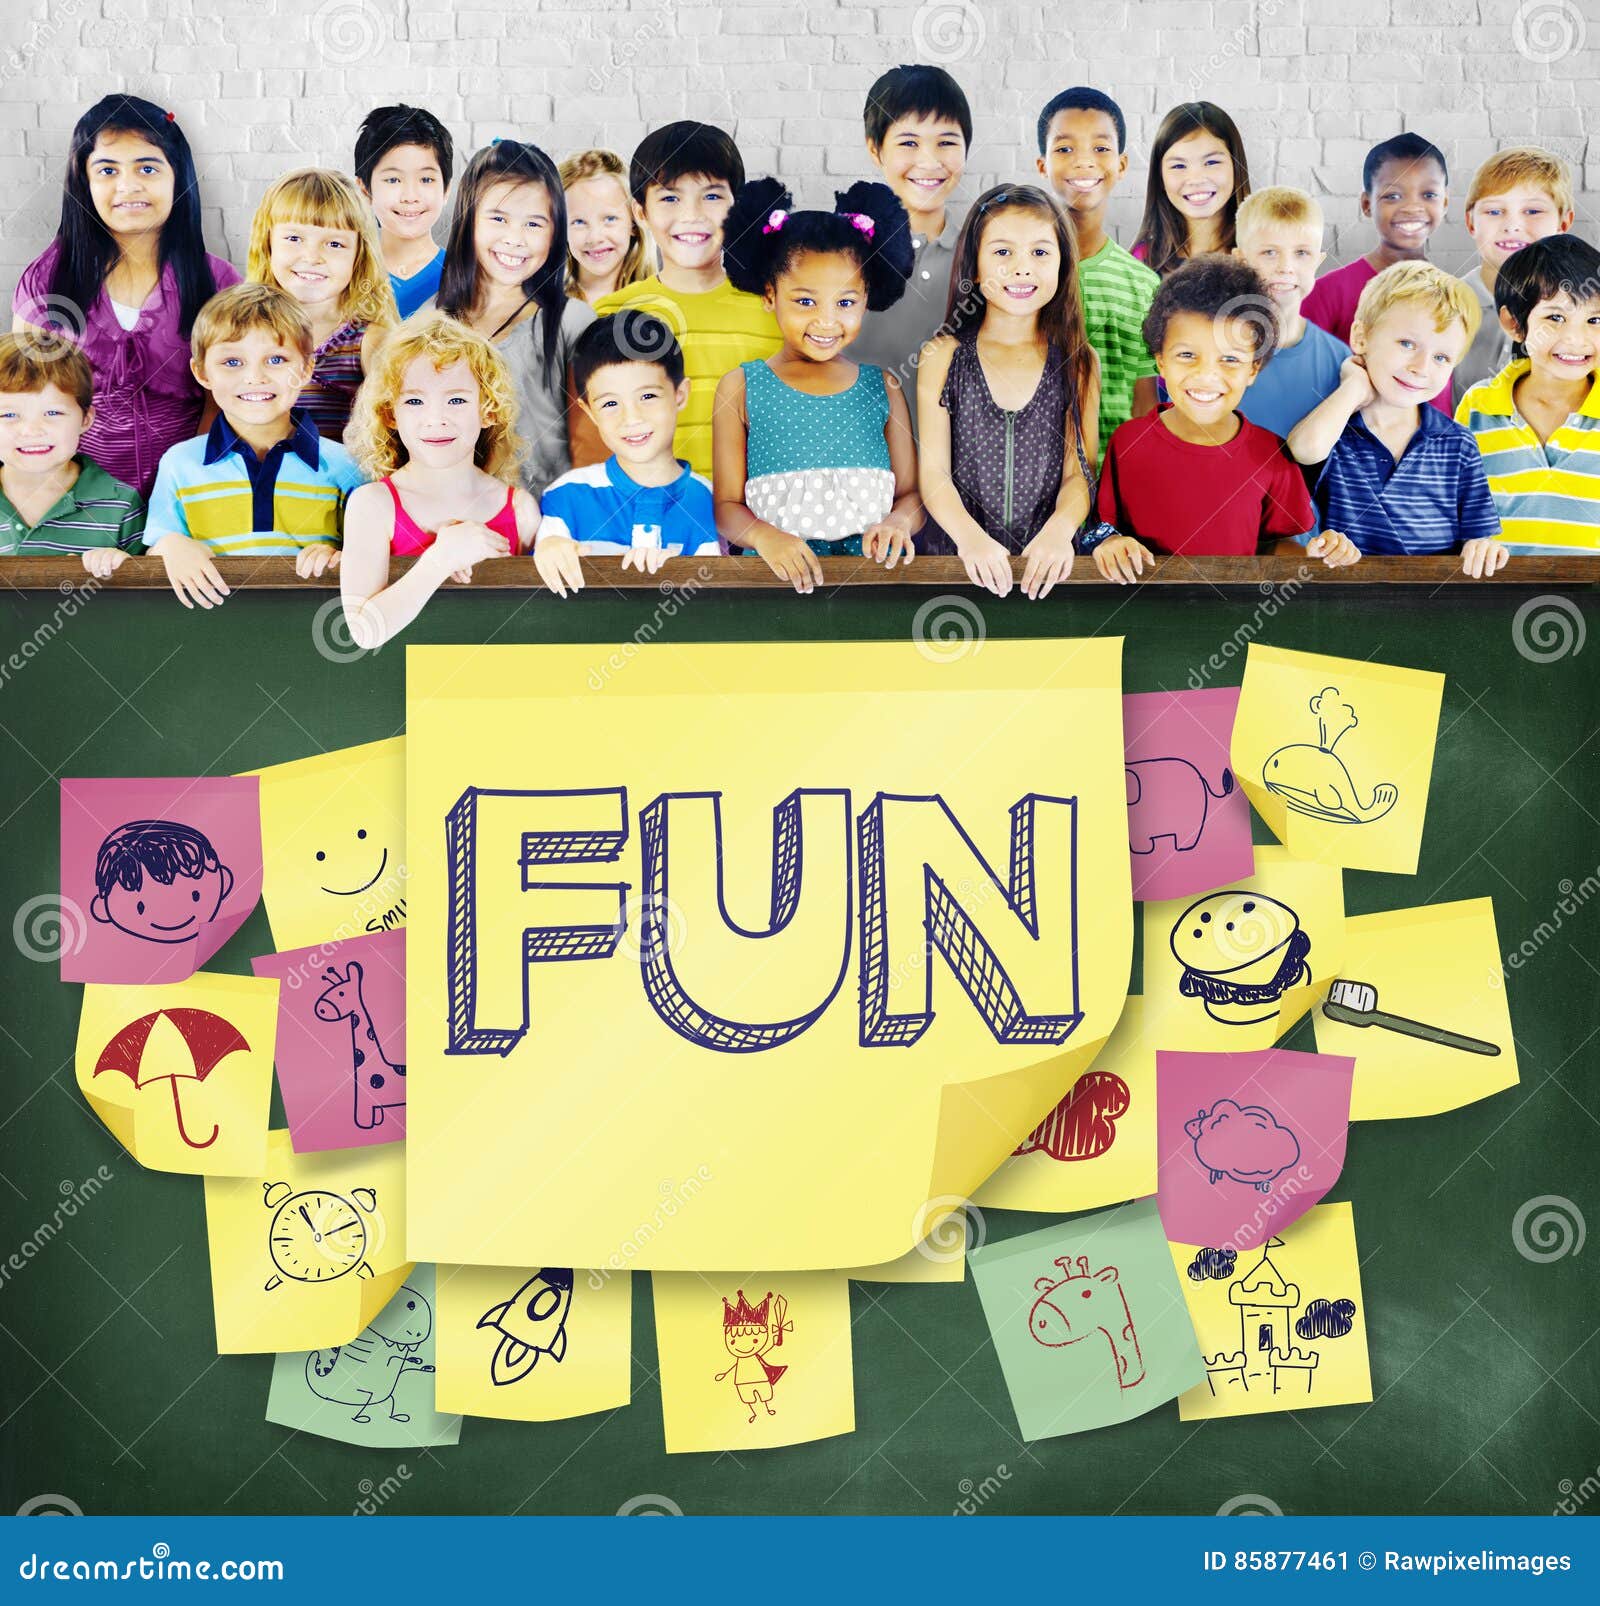 children playful happiness enjoyment childhood concept